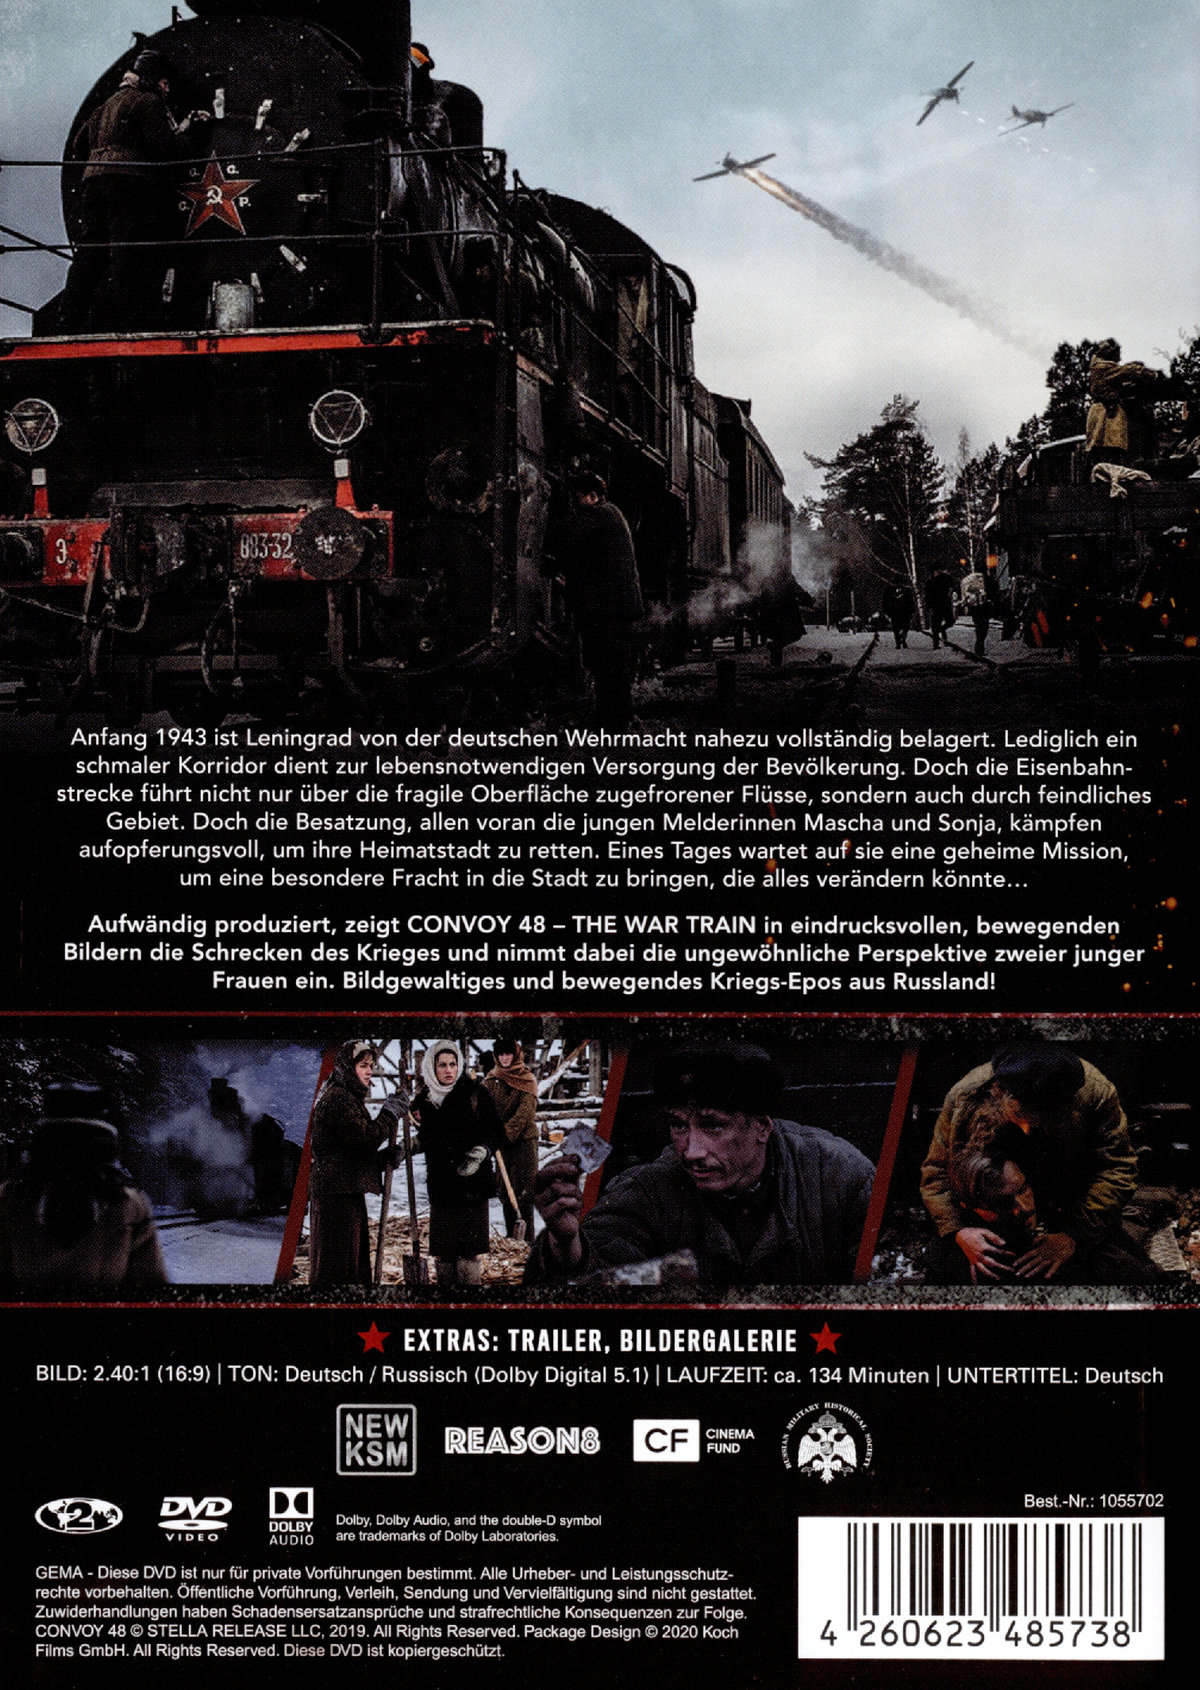 Convoy 48 - The War Train